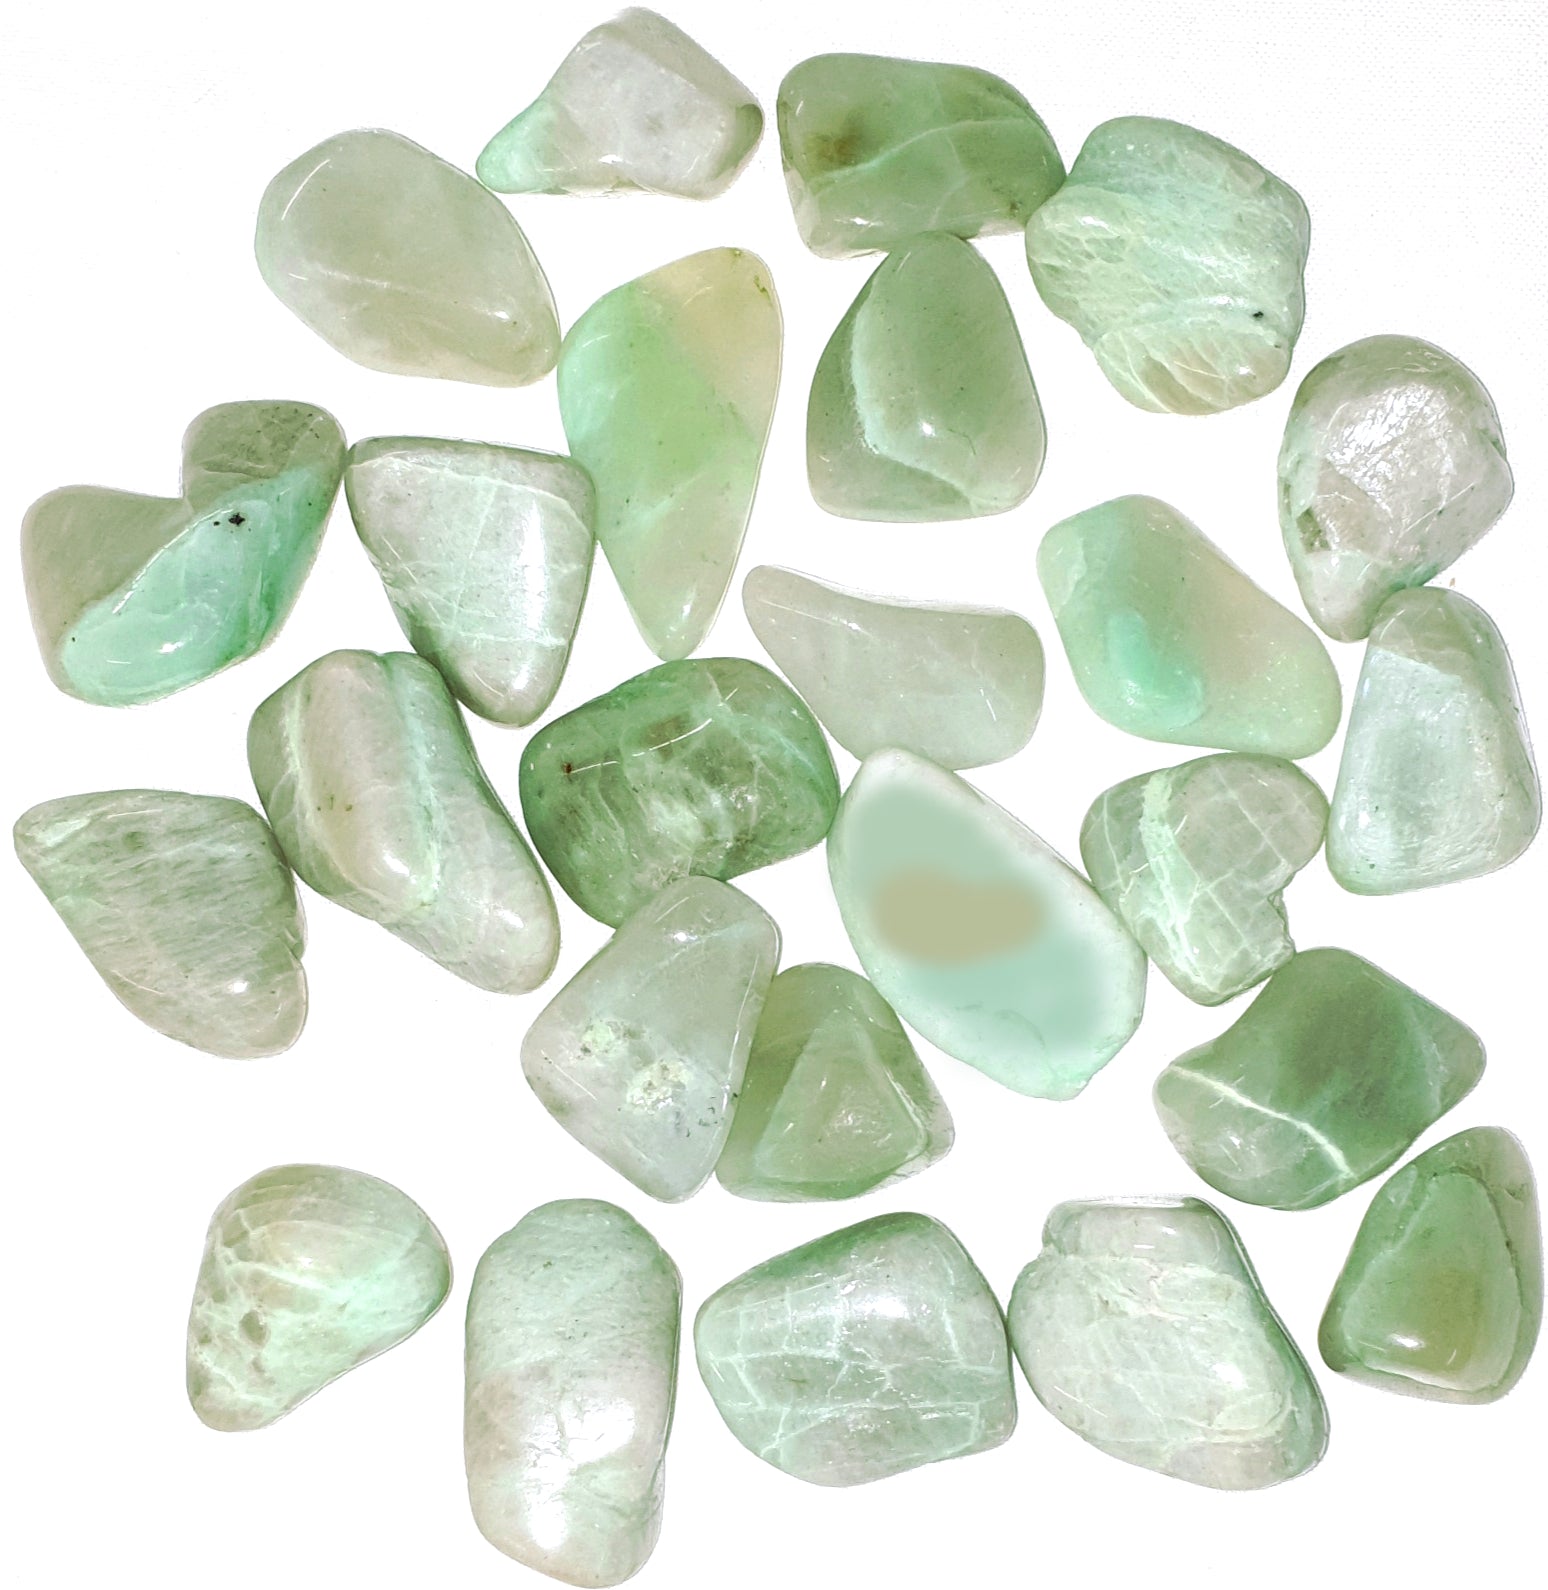 Green Moonstone Polished Healing Crystal Tumble Stone